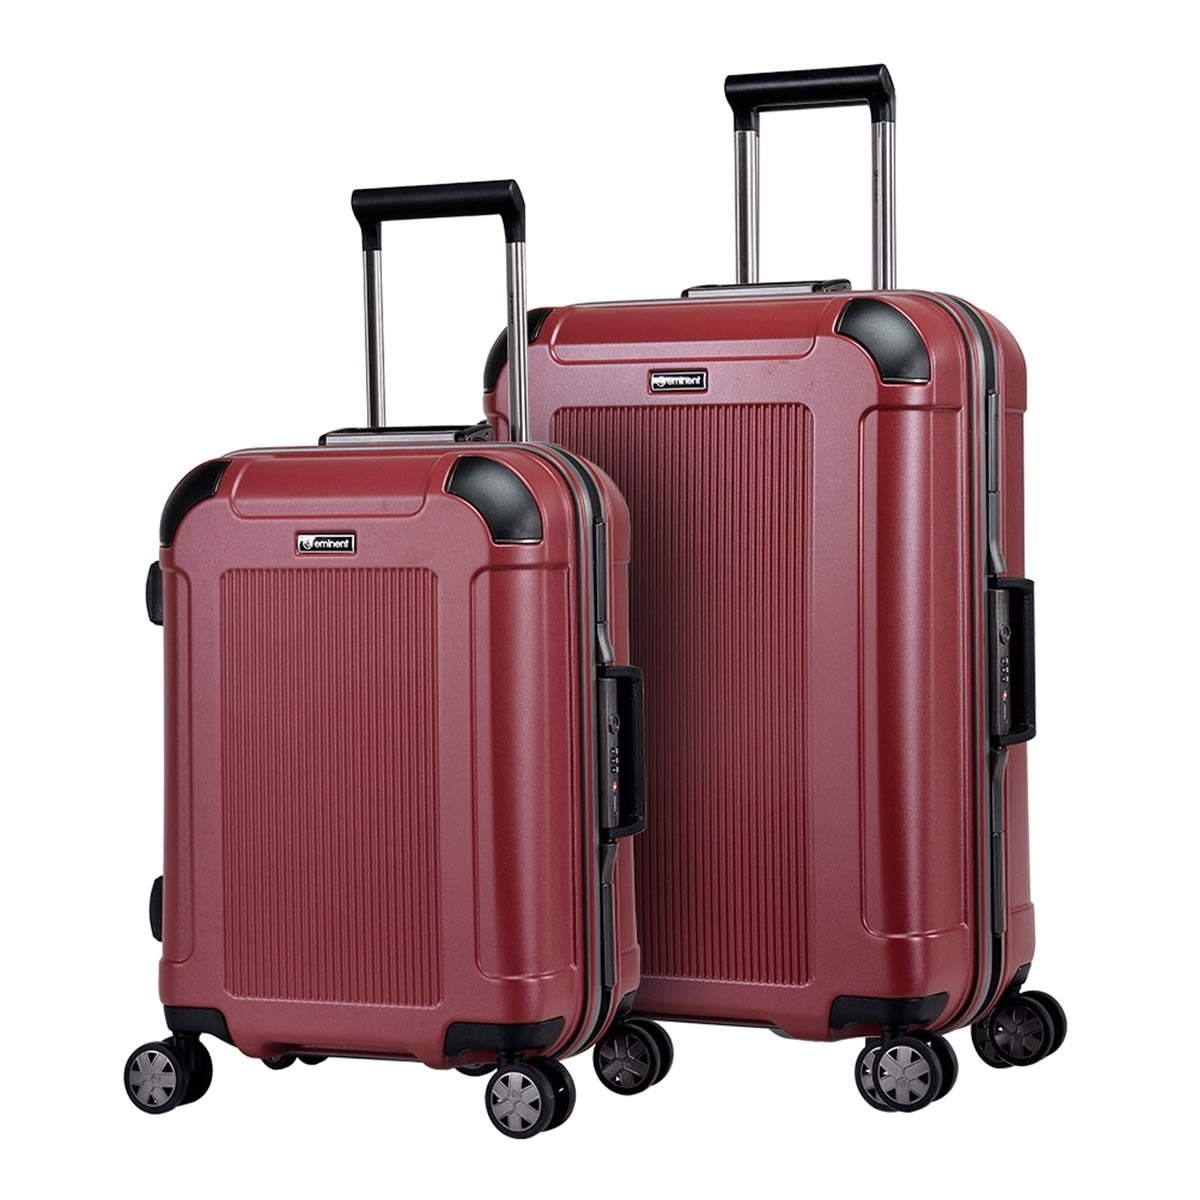 Eminent 20吋 + 24吋 PC+鋁合金細框行李箱 胭脂紅